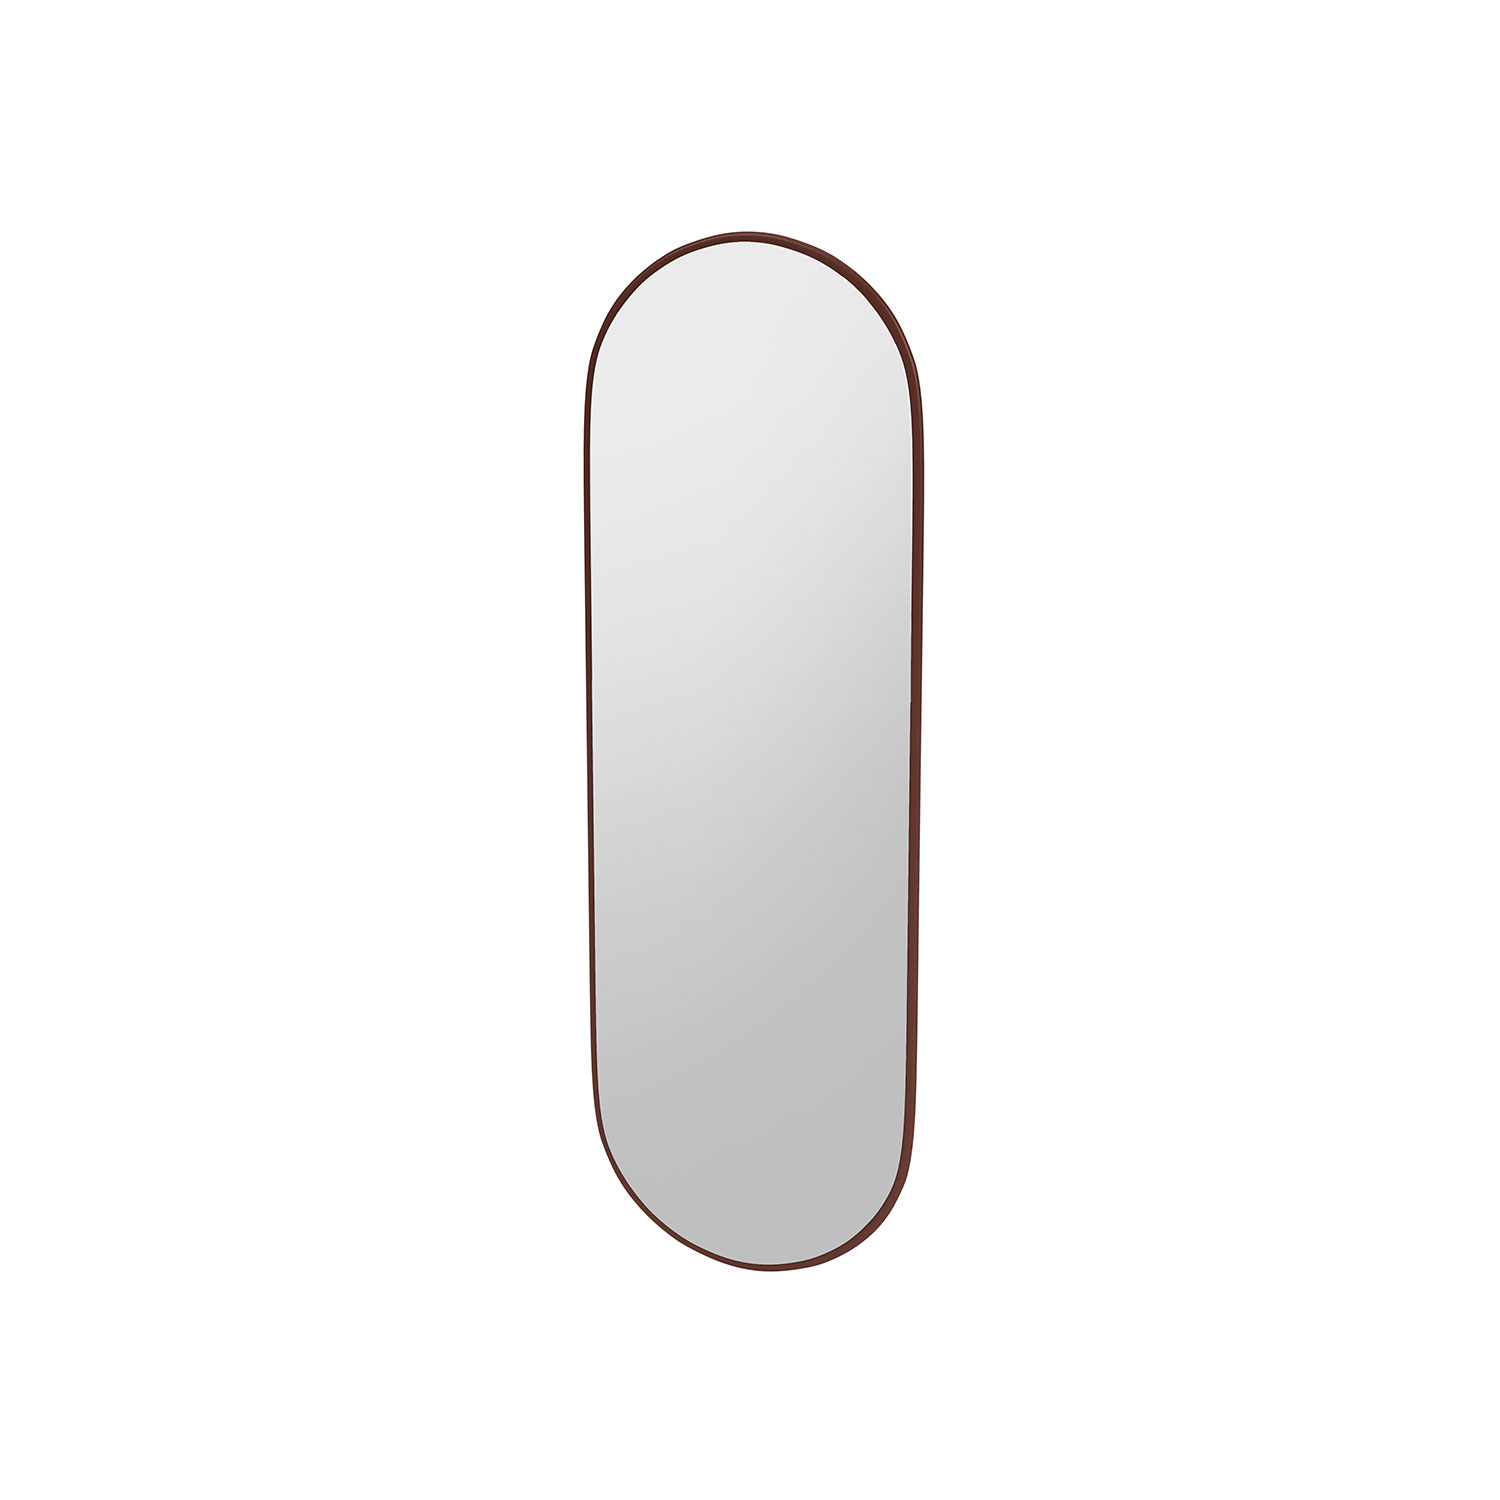 FIGURE oval mirror, Masala